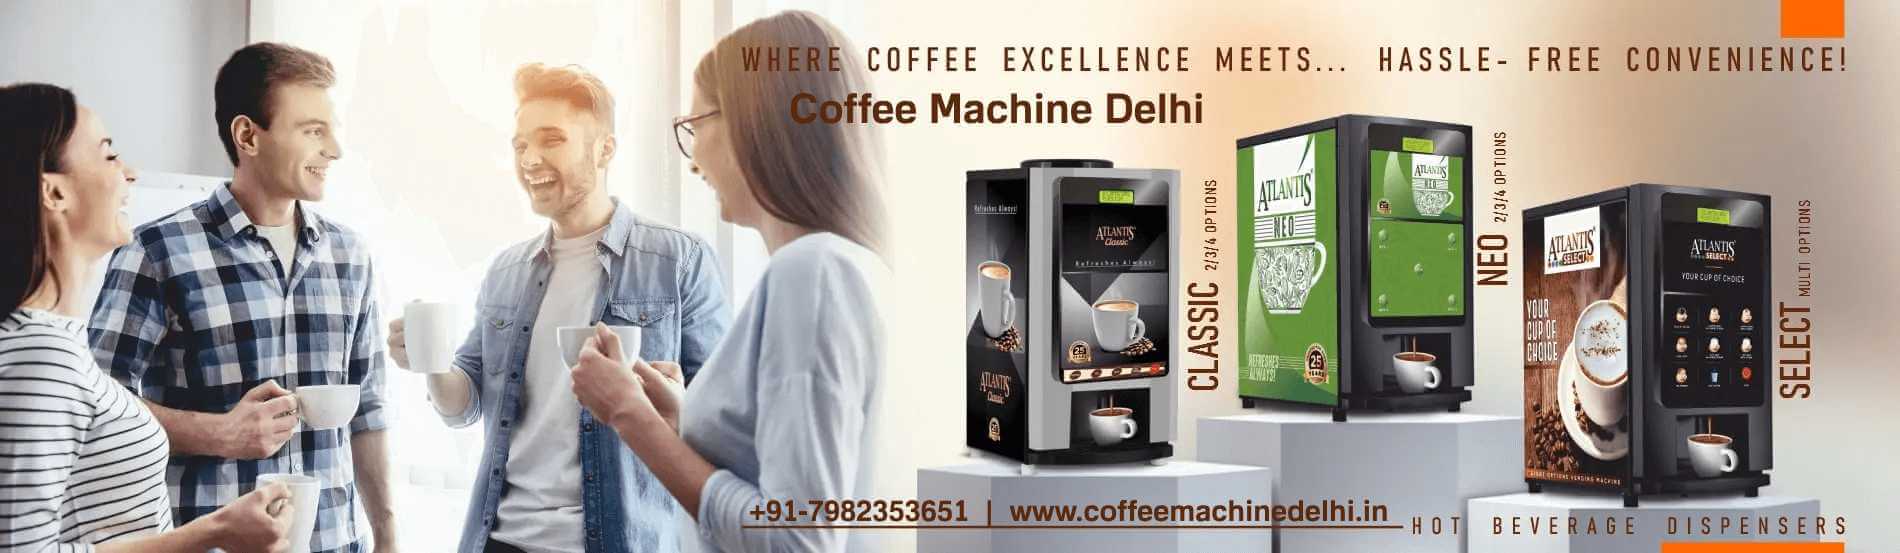 Atlantis Tea Coffee Vending Machine Services Delhi